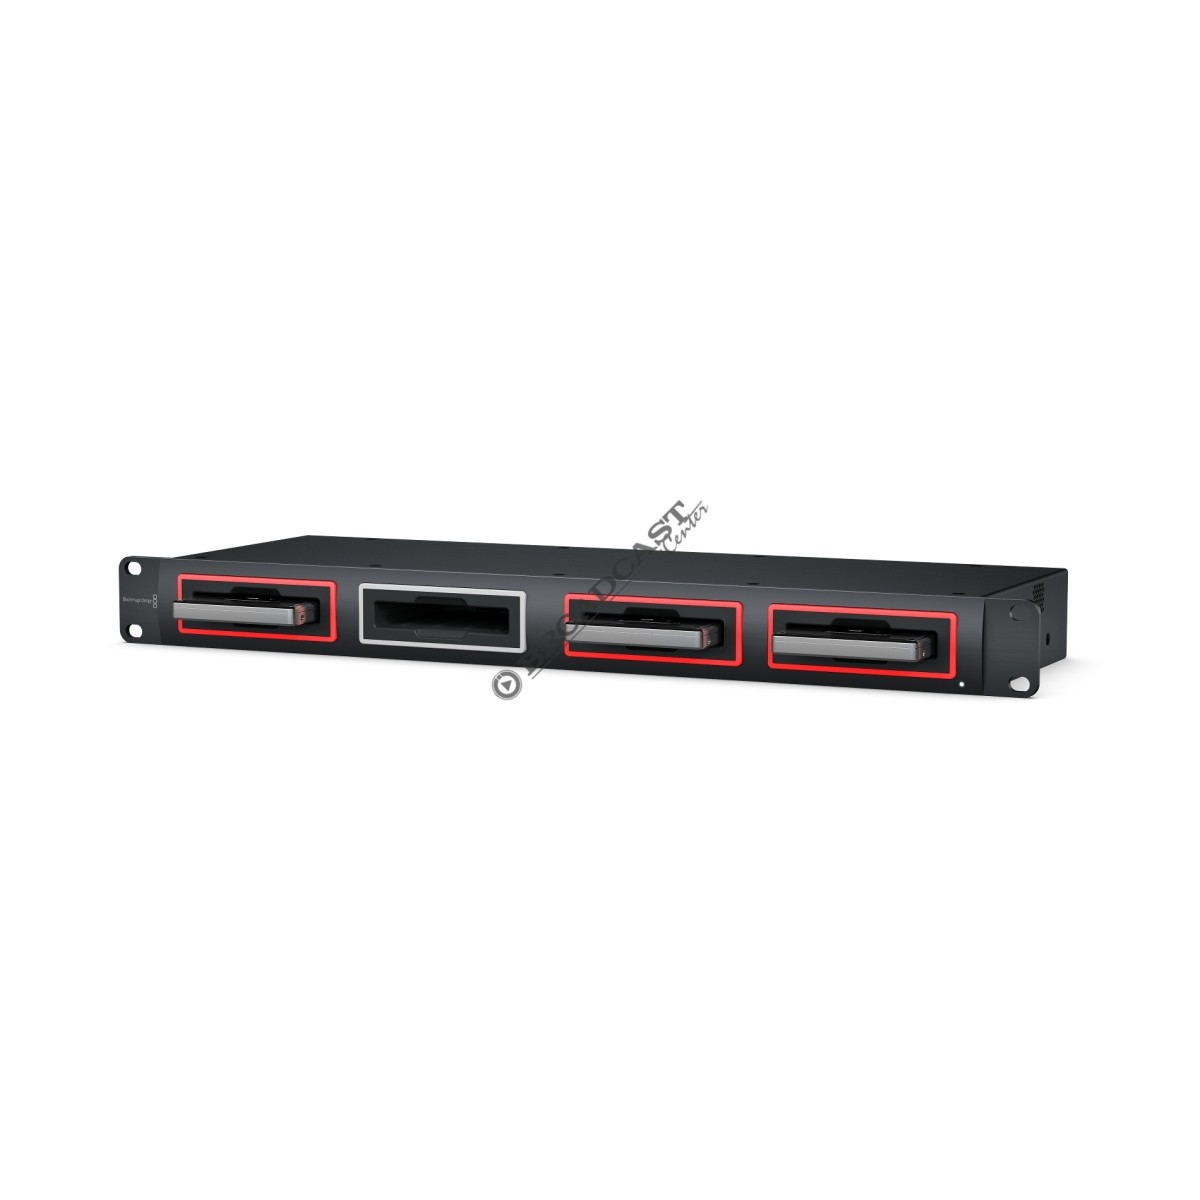 Blackmagic MultiDock 10G - Stazione dock 4 Slot SSD